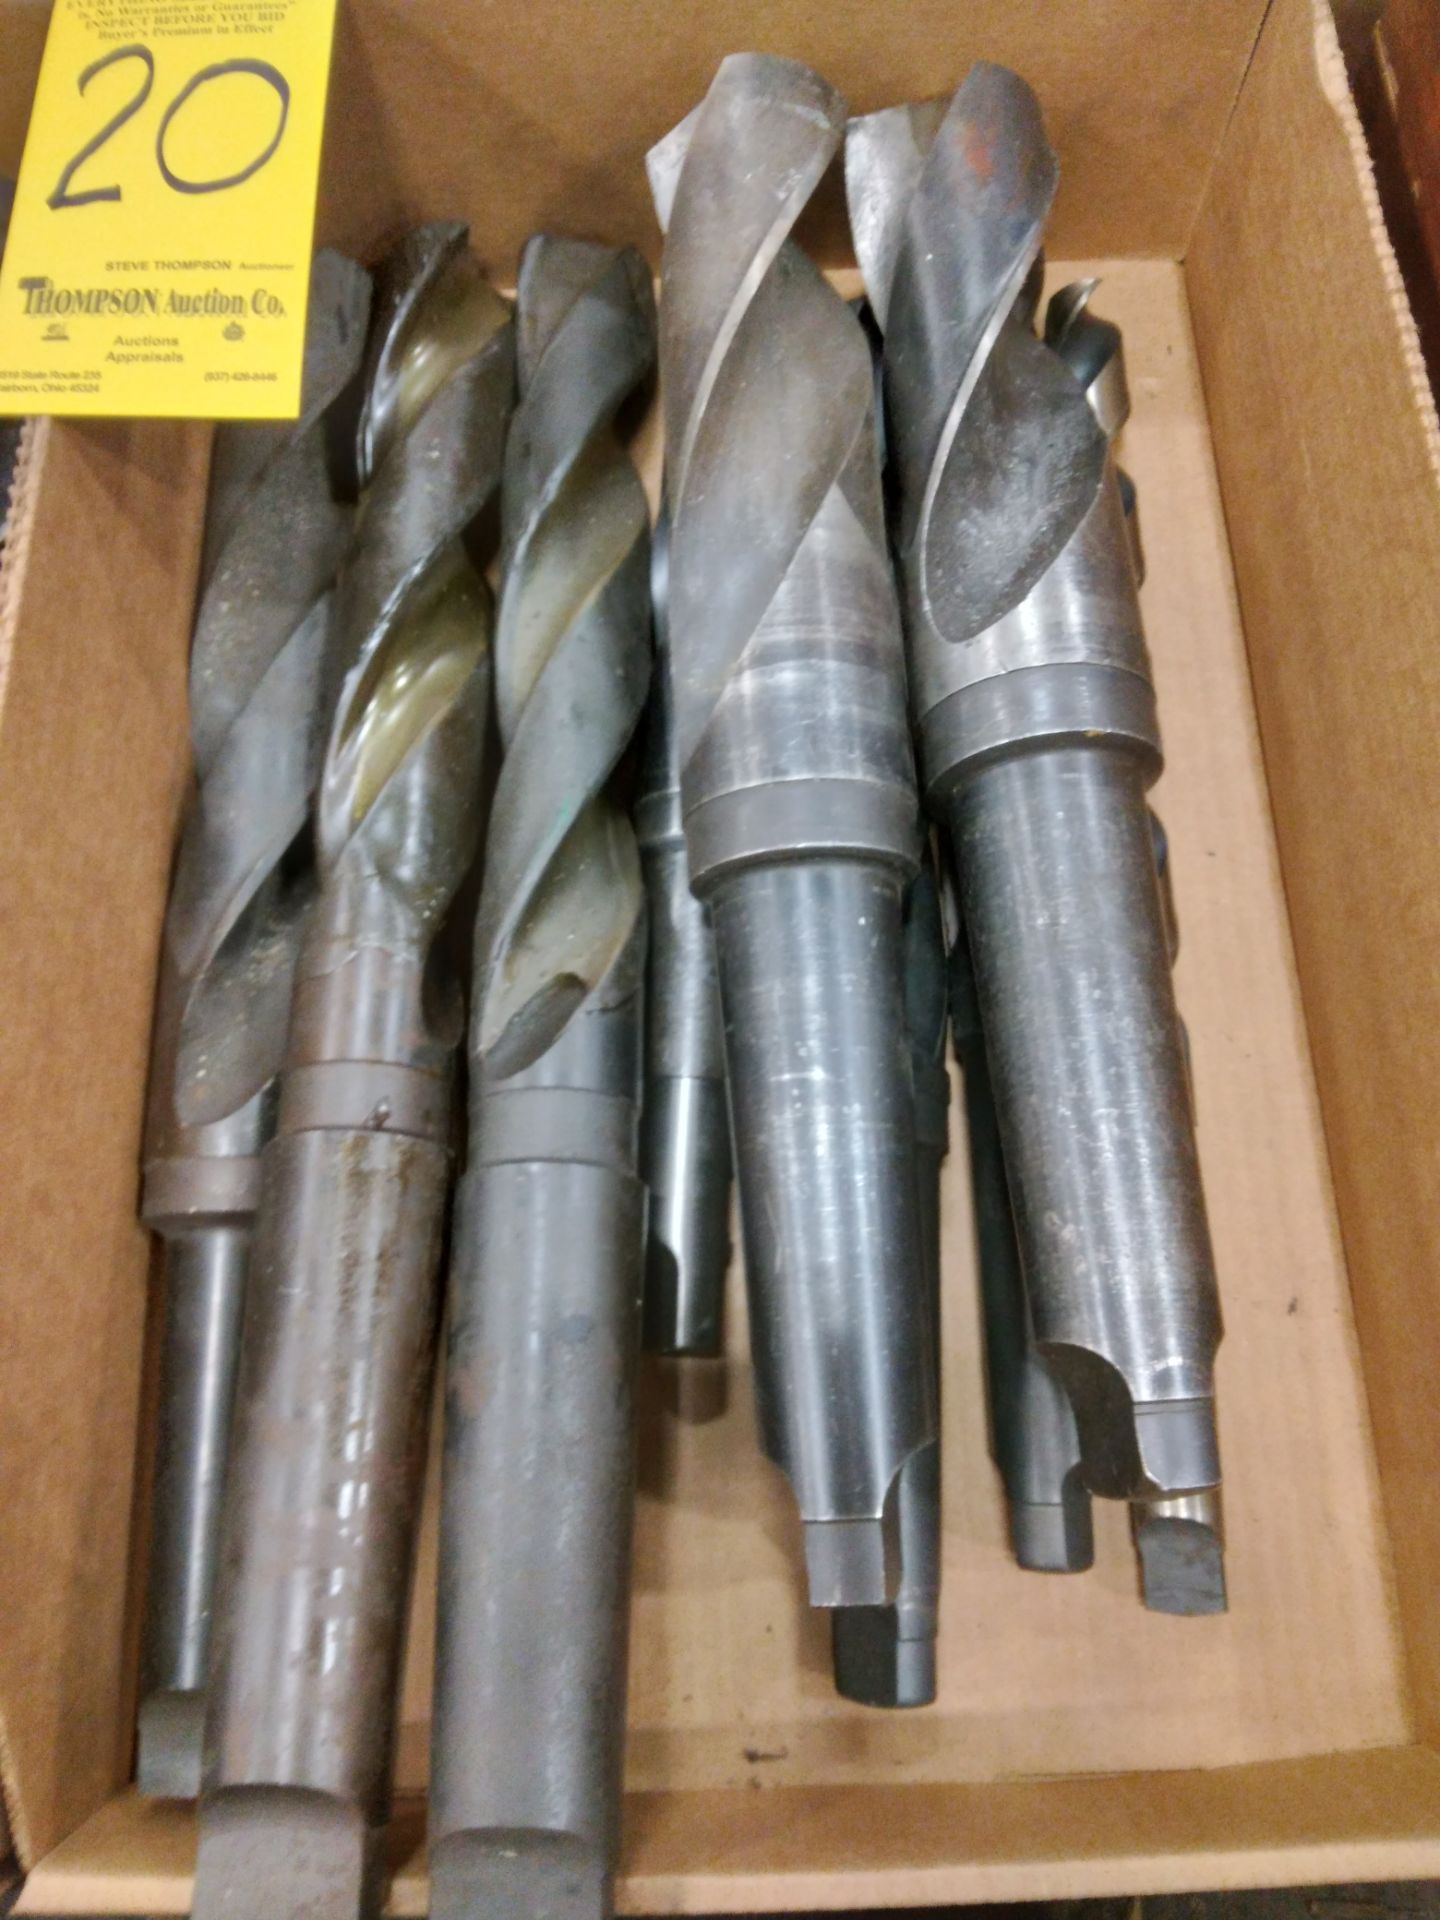 Large Morse Taper Drill Bits